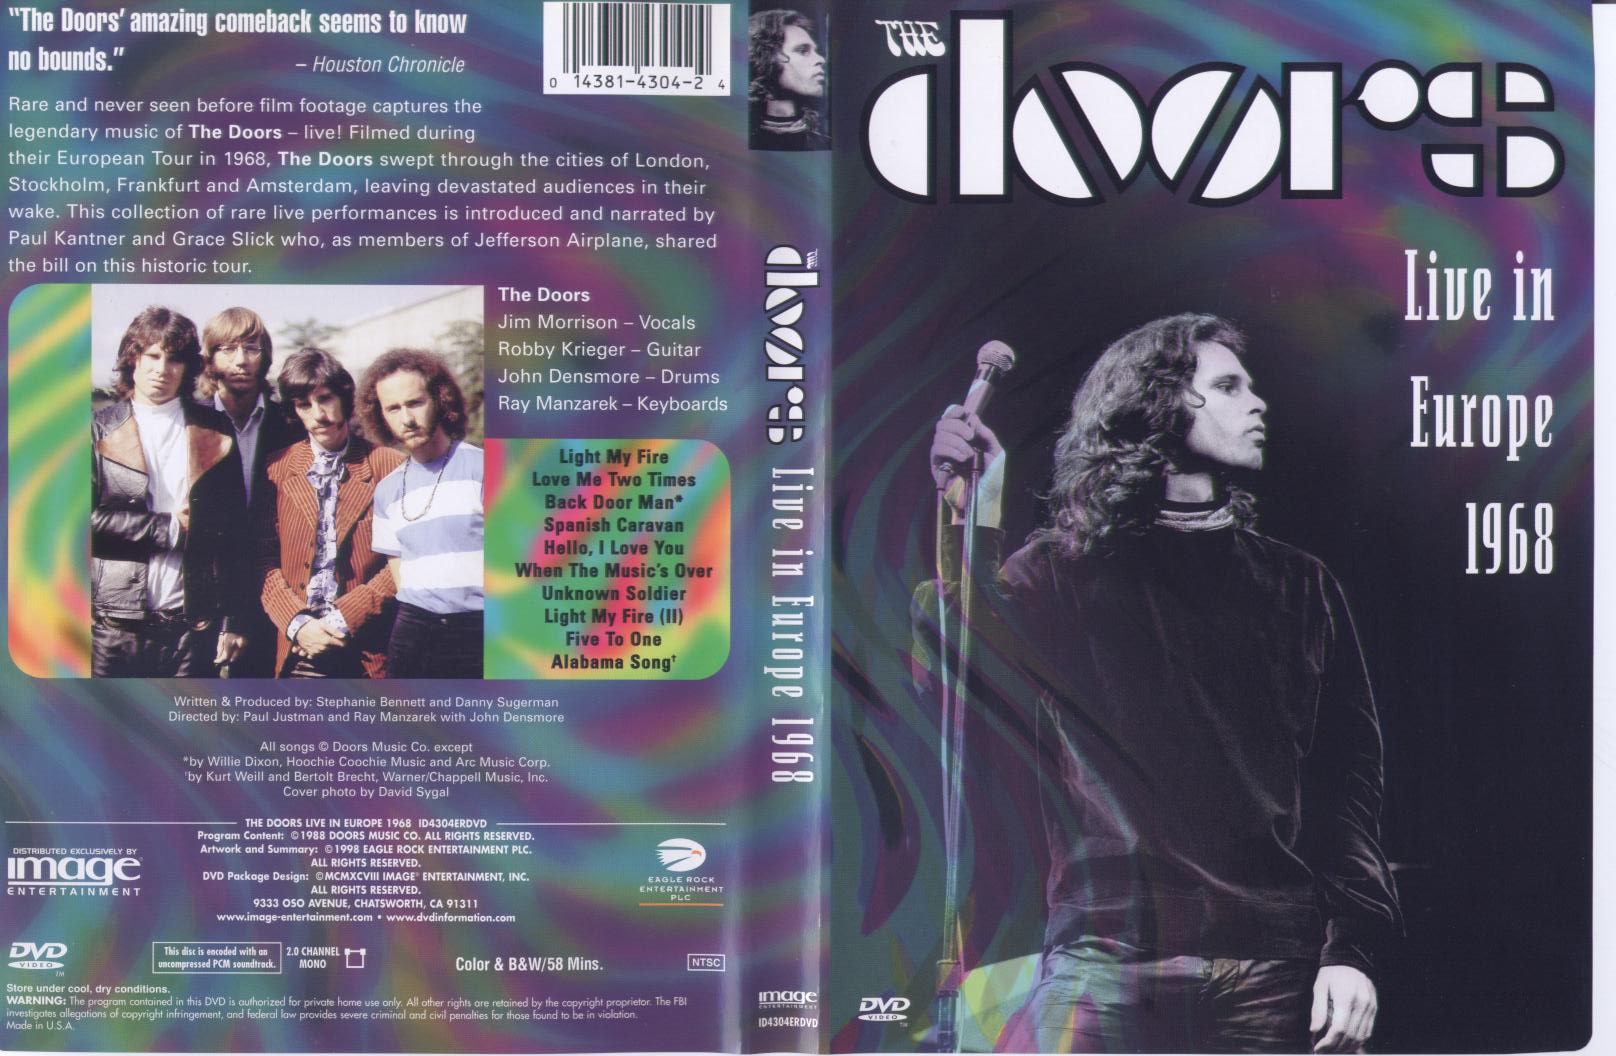 Jaquette DVD The Doors Live in Europe 1968